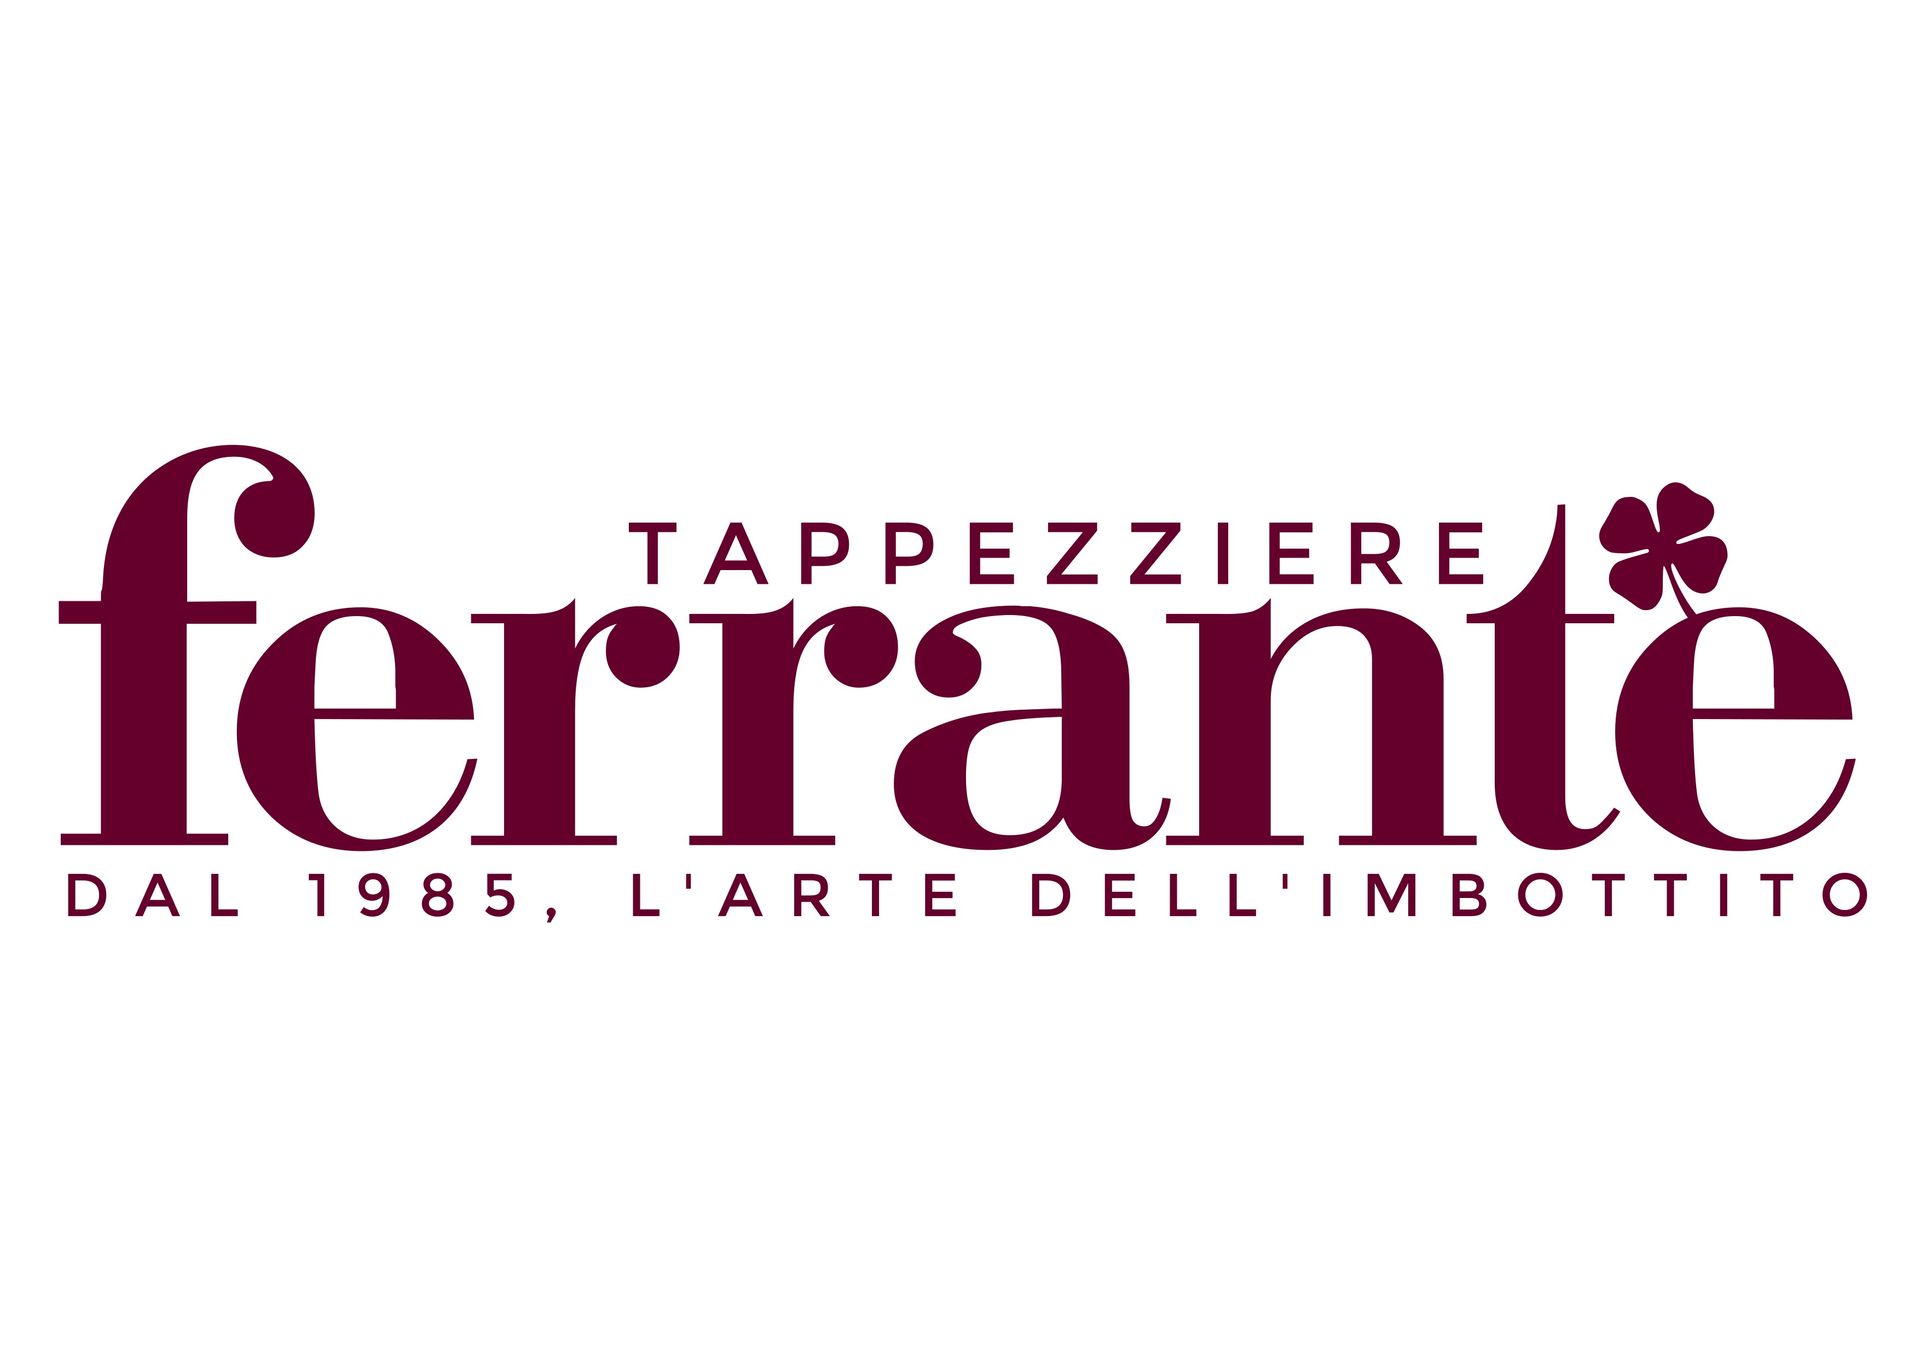 Tappezziere Ferrante-LOGO